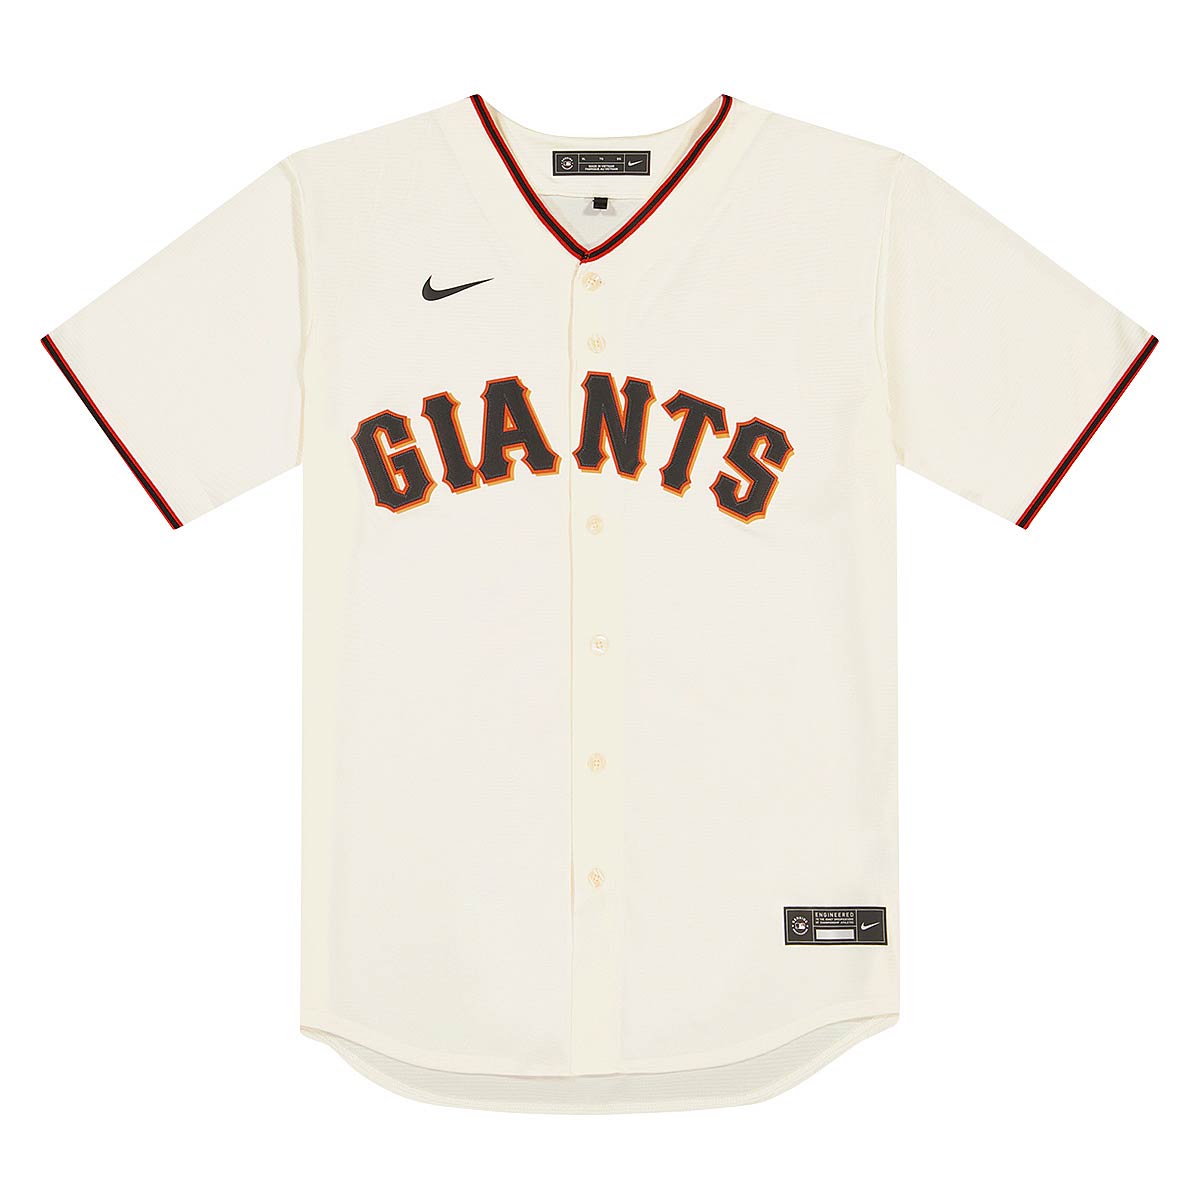 MLB San Francisco Giants Men's Replica Baseball Jersey.